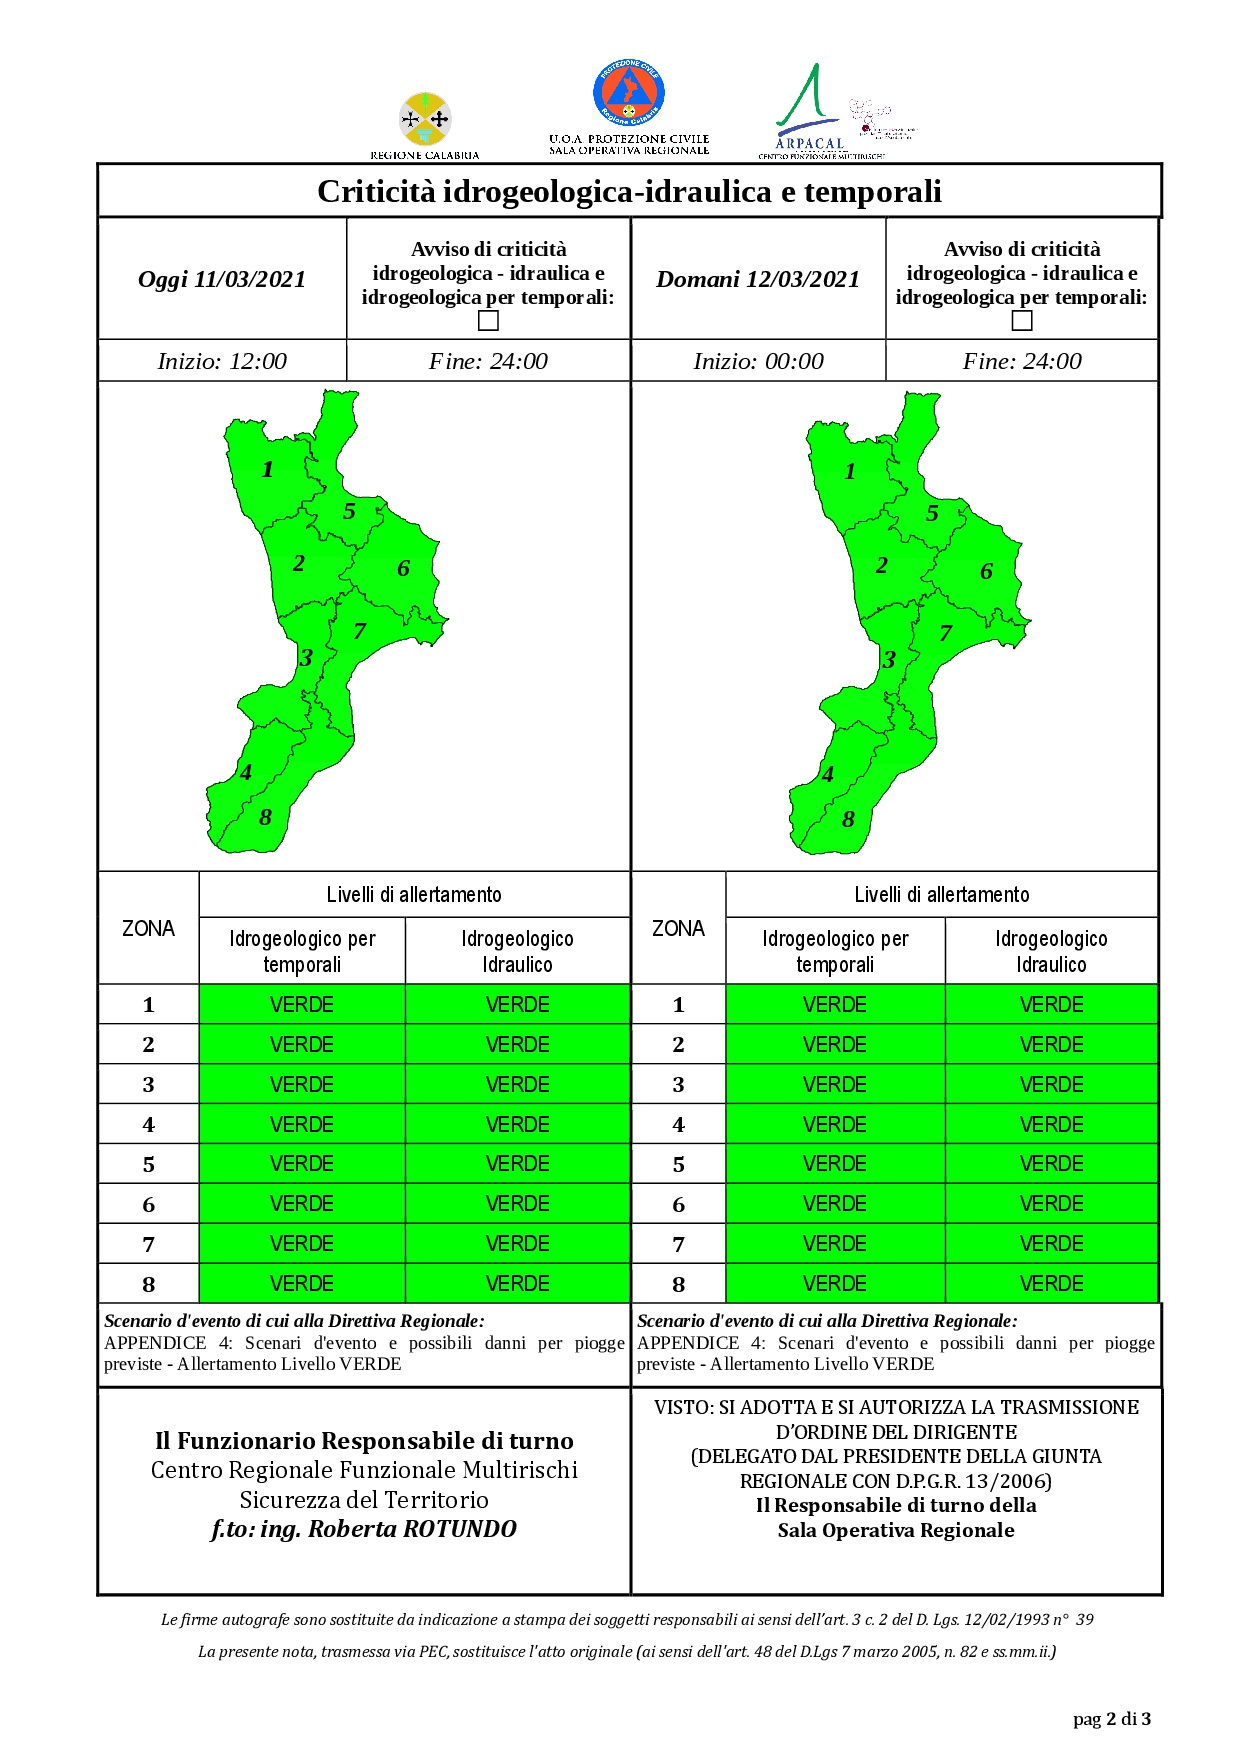 Criticità idrogeologica-idraulica e temporali in Calabria 11-03-2021